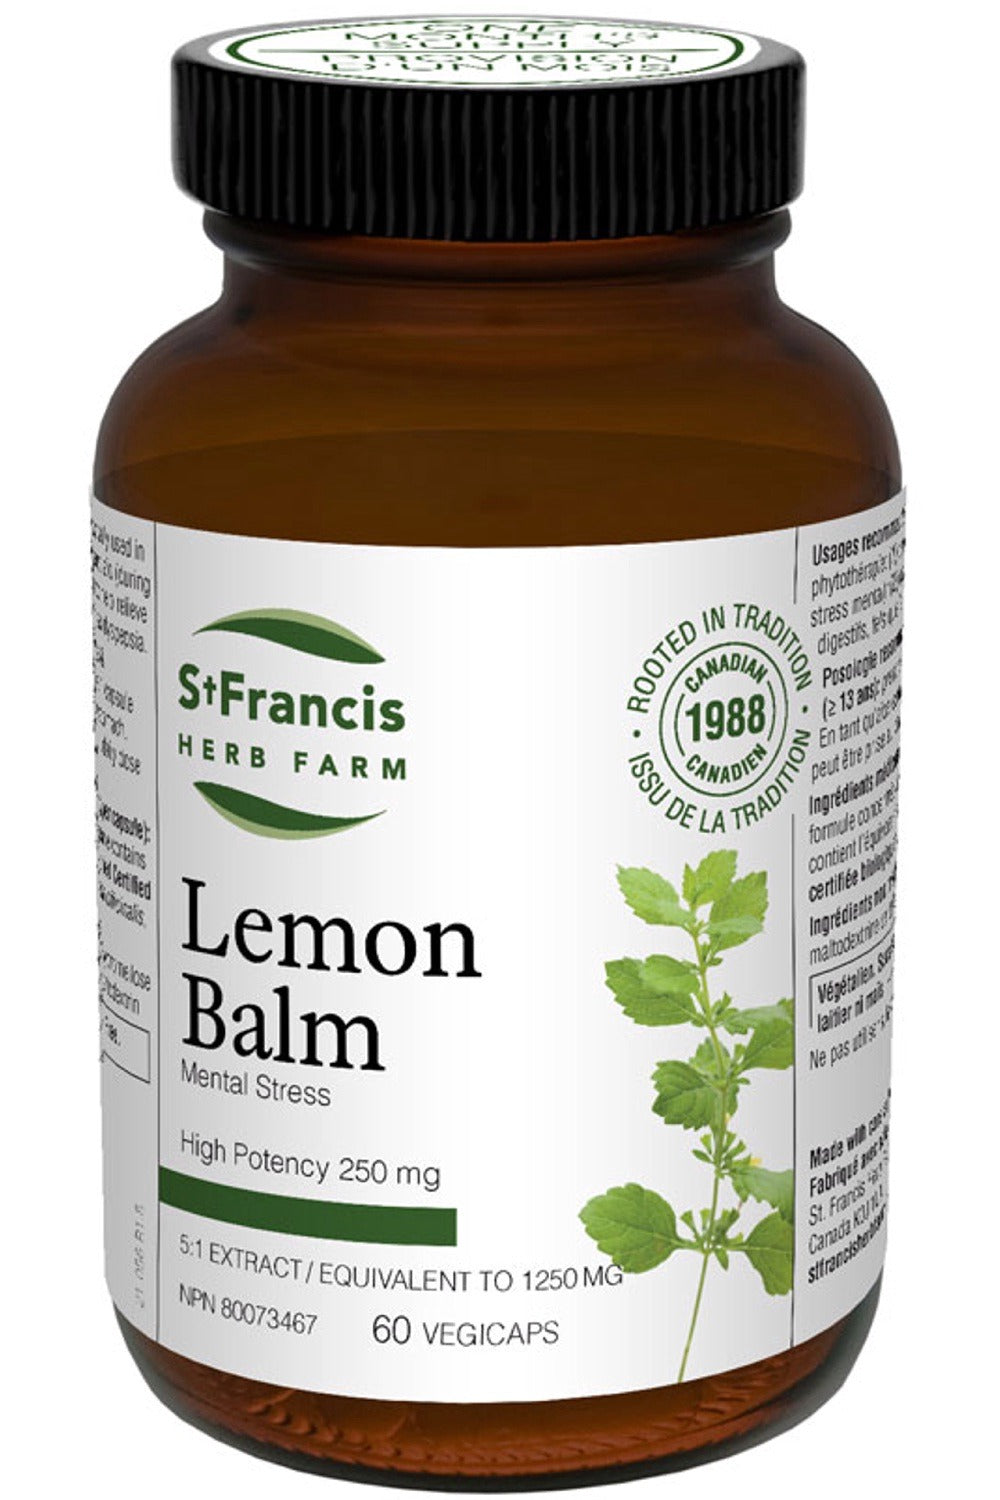 ST FRANCIS HERB FARM Lemon Balm Capsules (60 caps)